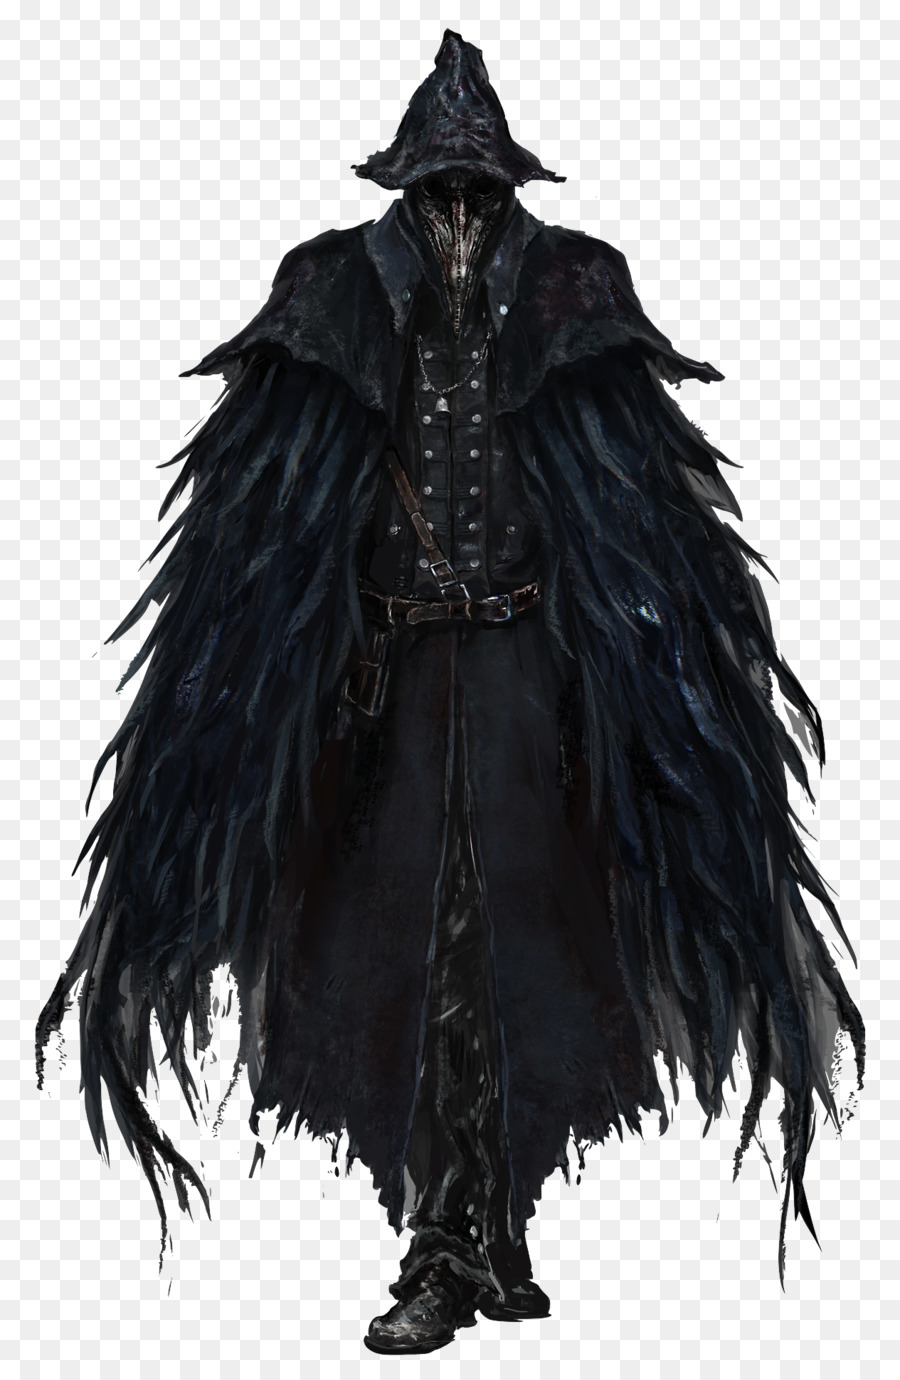 Dark Souls Costume Design